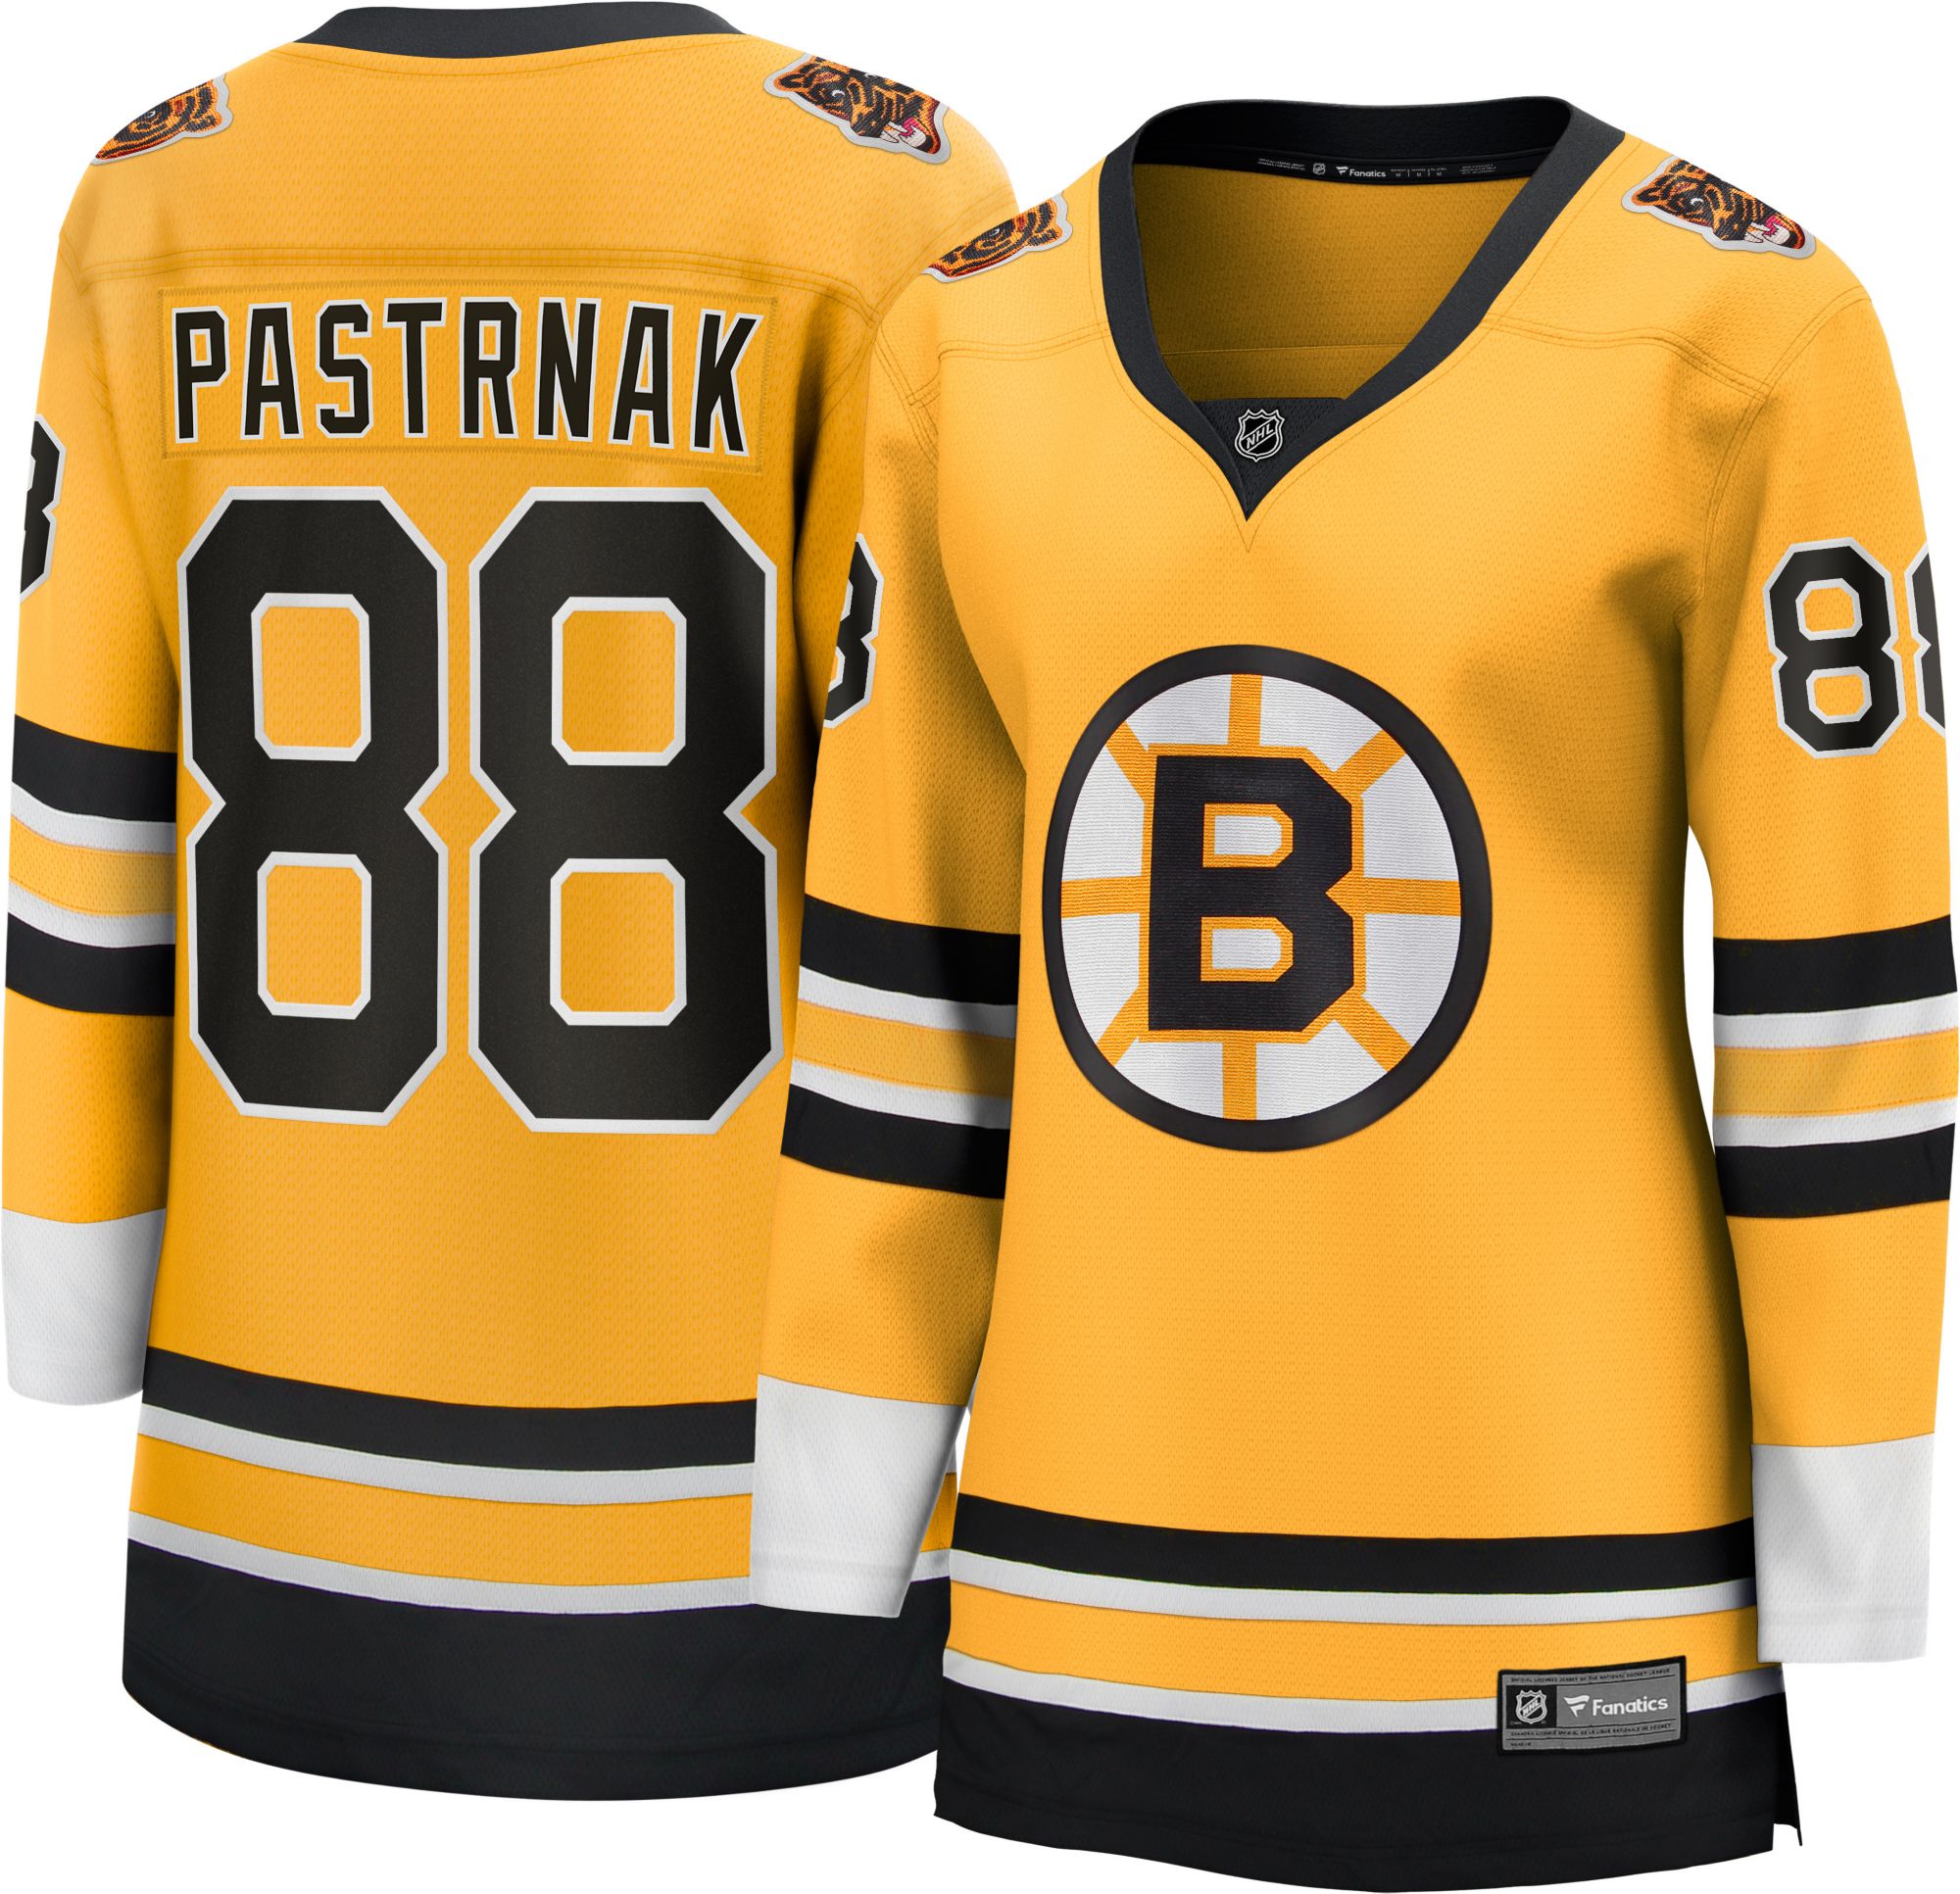 Youth David Pastrnak Black Boston Bruins Replica Jersey